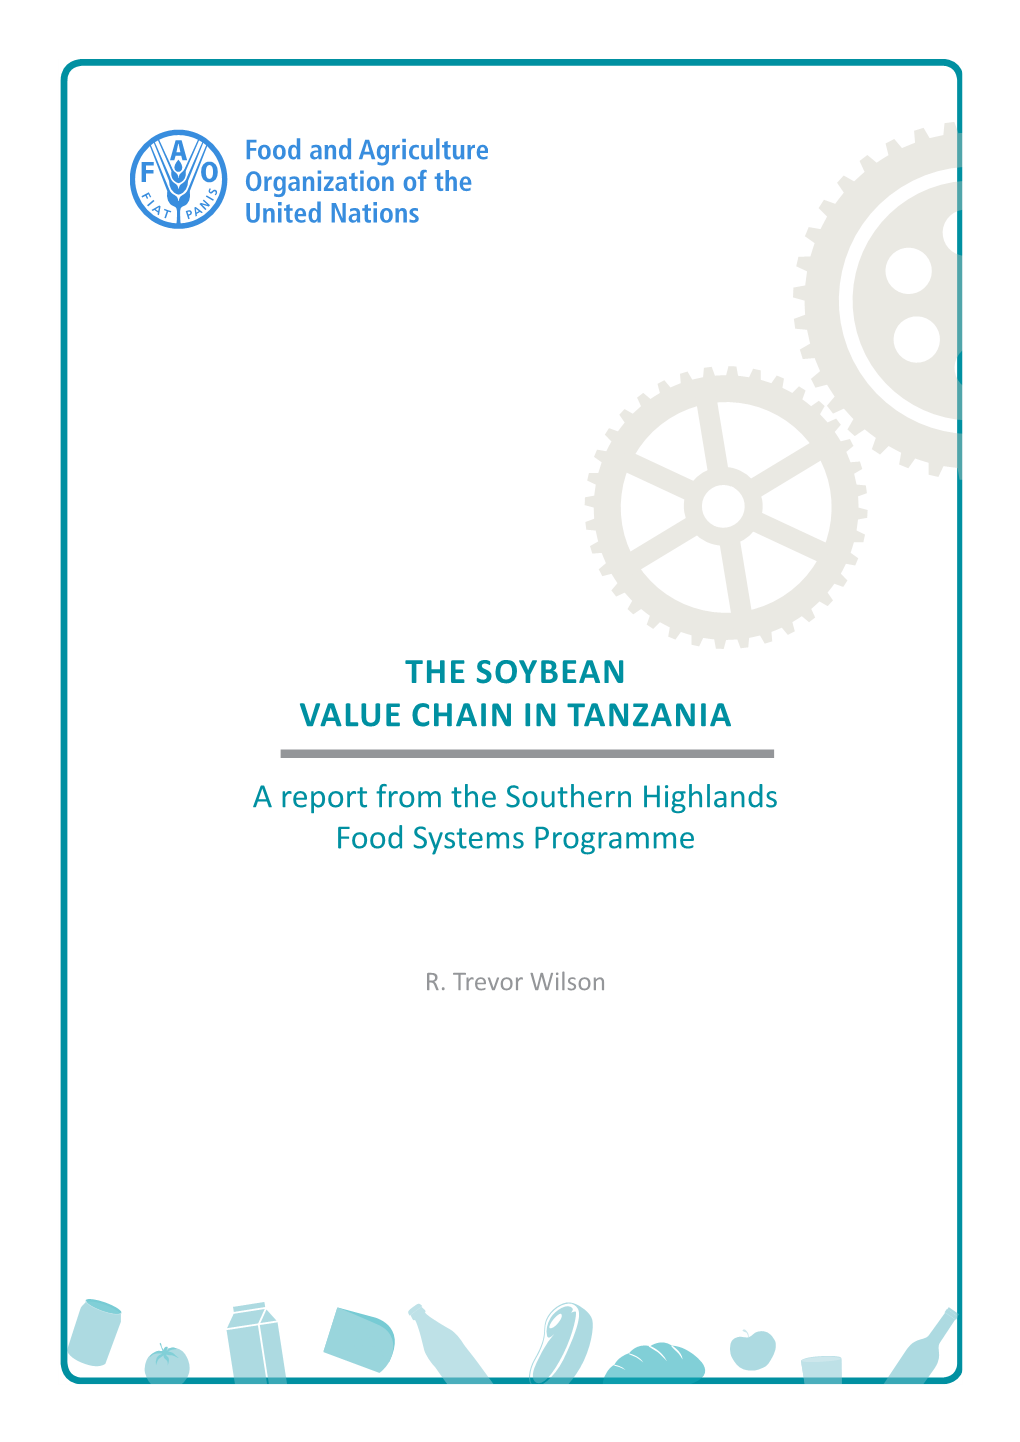 The SOYBEAN Value Chain in Tanzania